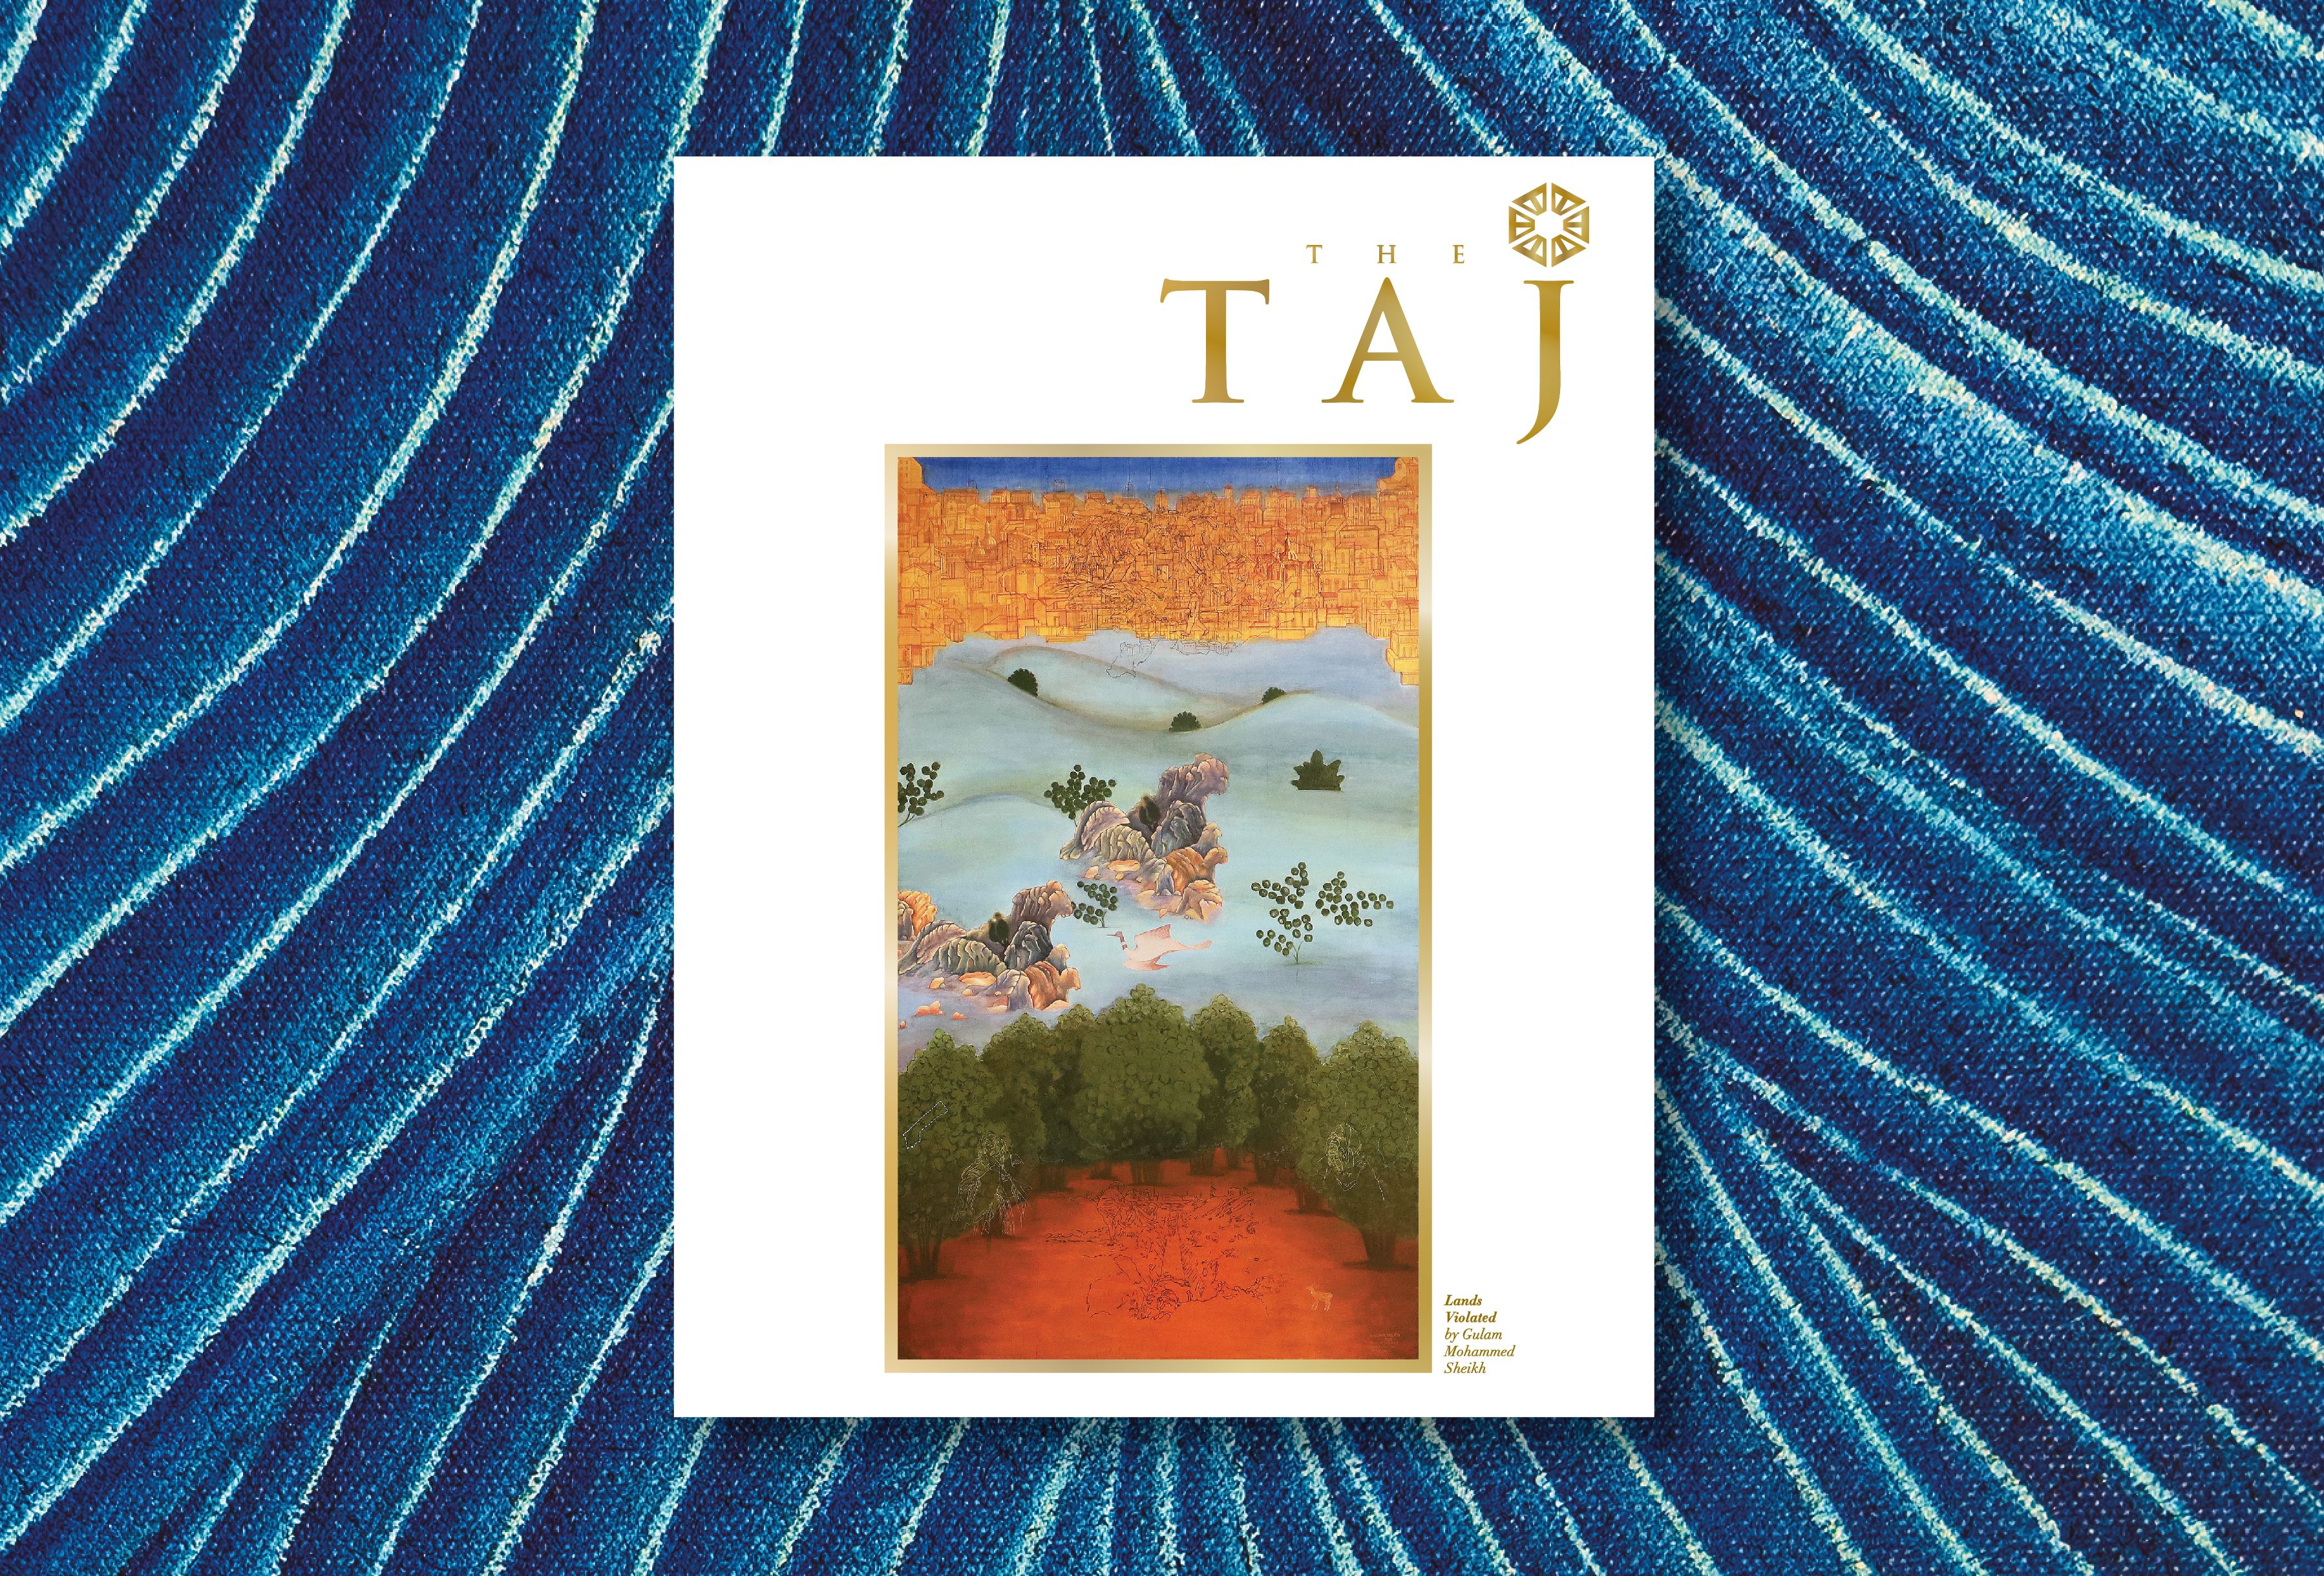 Latest Issue of Taj Magazine